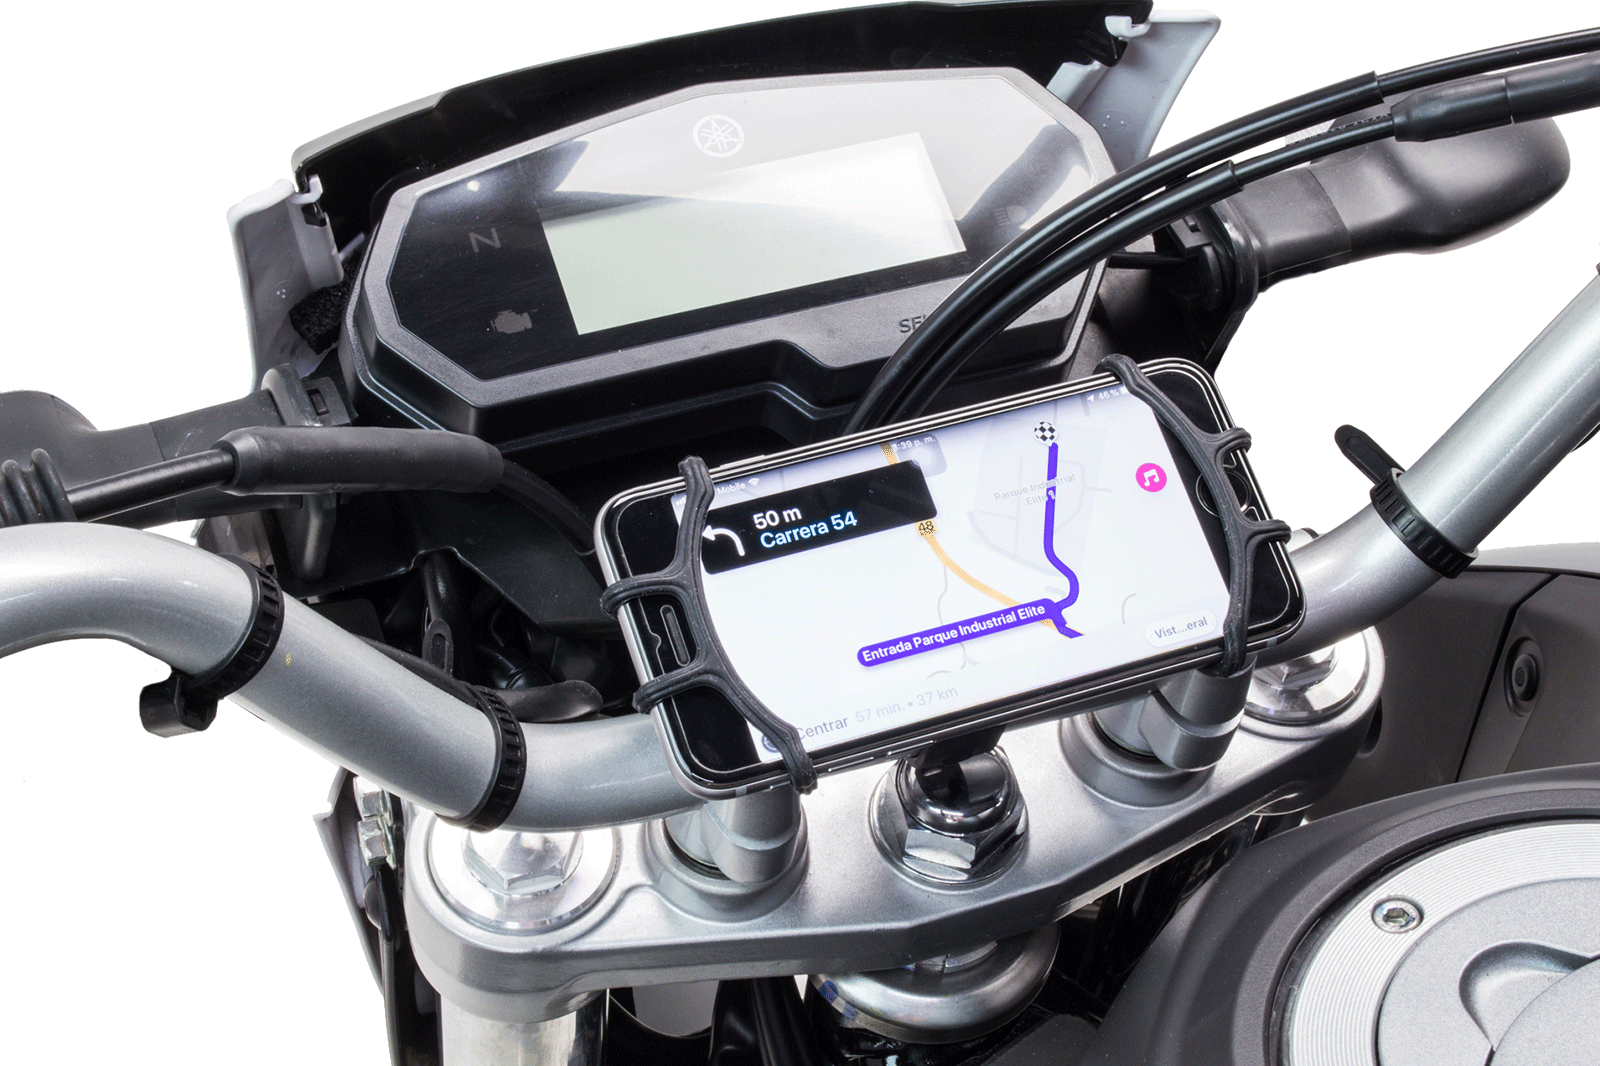 Soporte para Celular con Funda Impermeable para Moto y Bicicleta